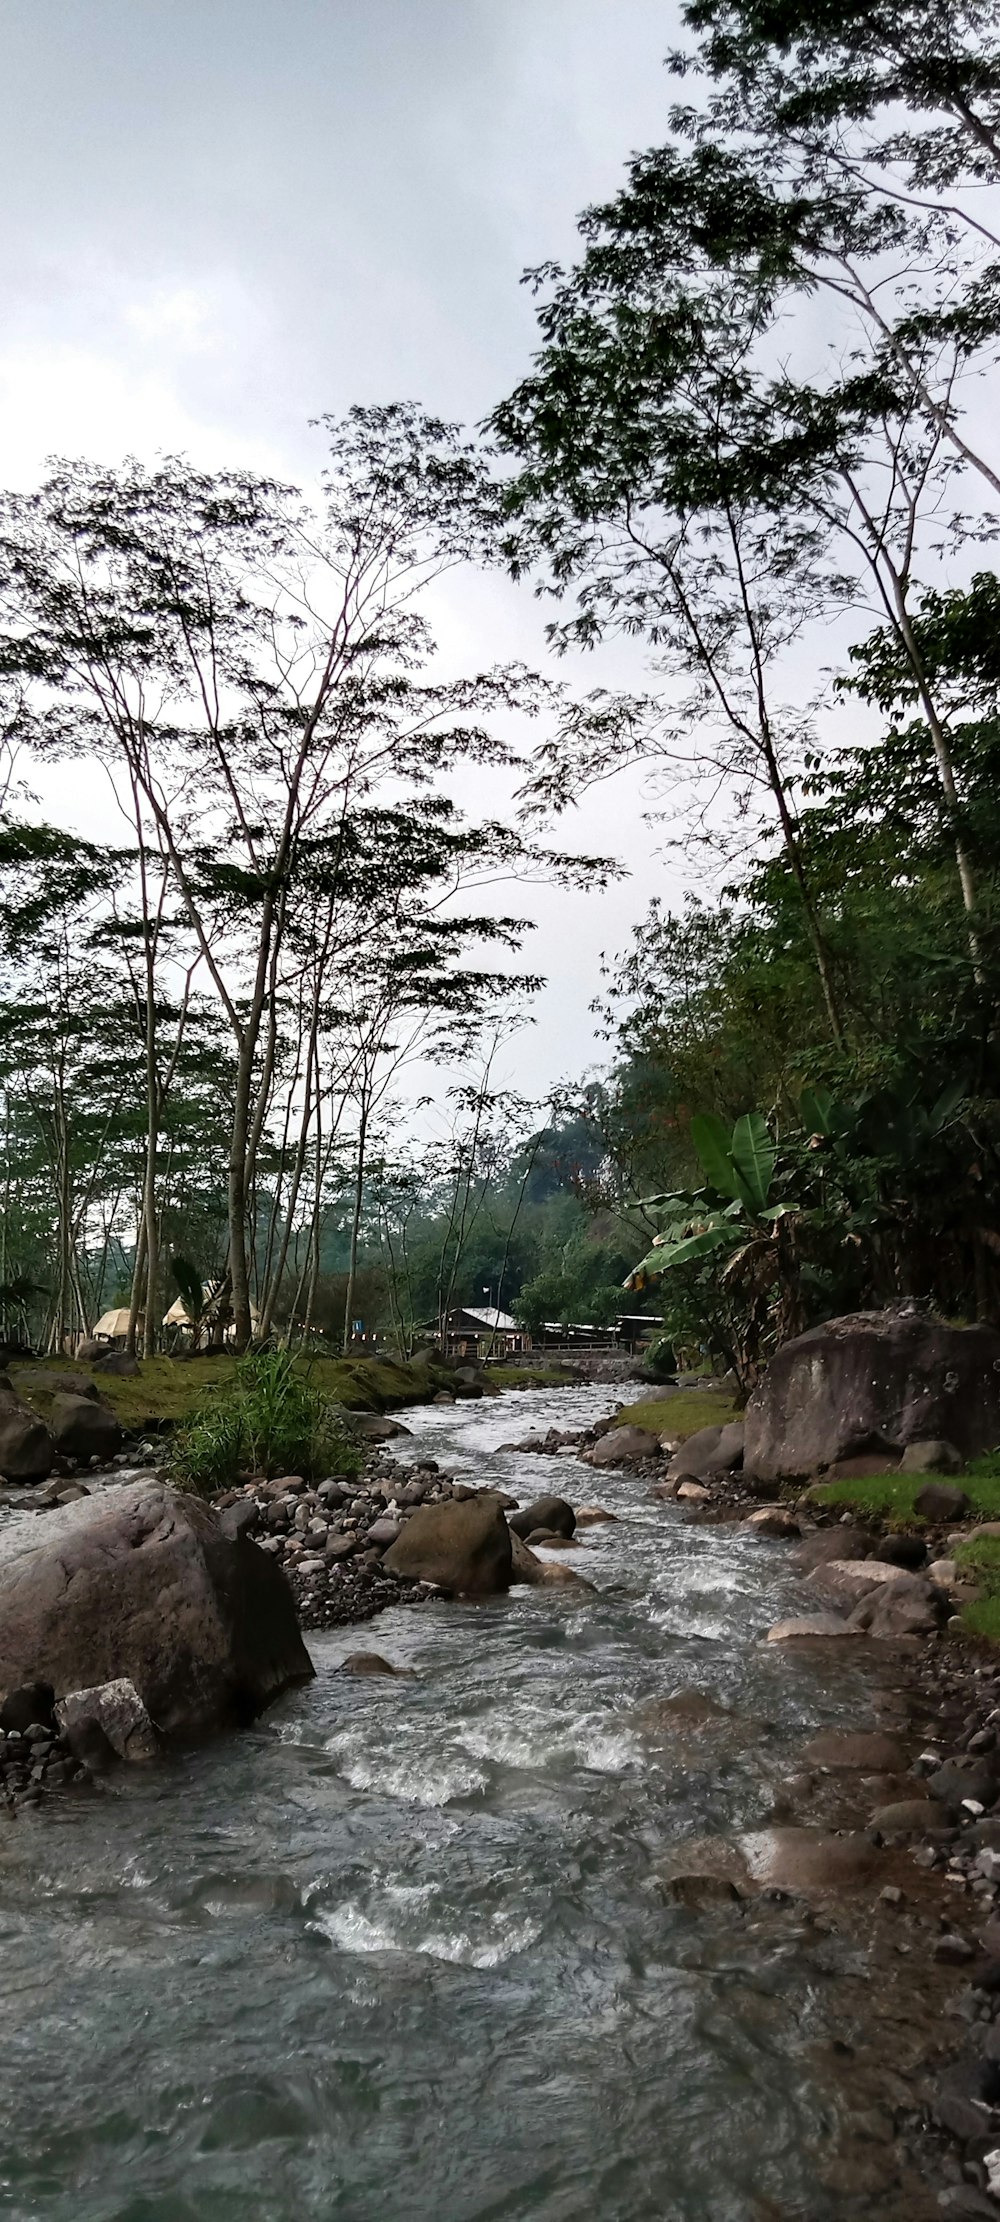 a river running through a lush green forest